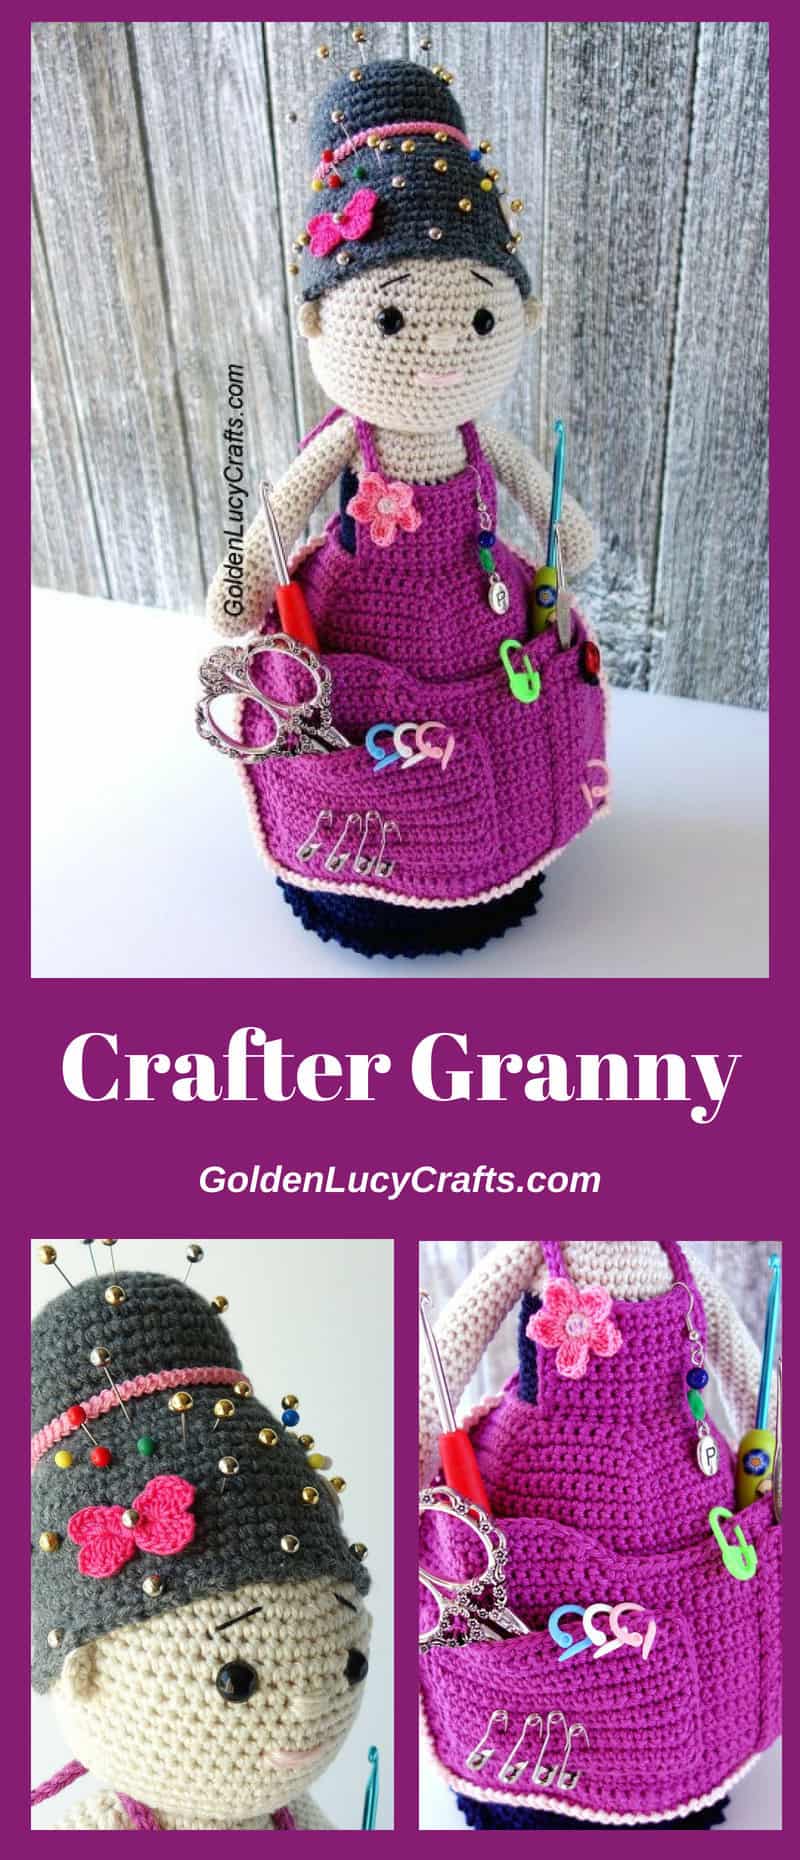 Crafter Granny, crochet granny, crochet crafter granny organizer